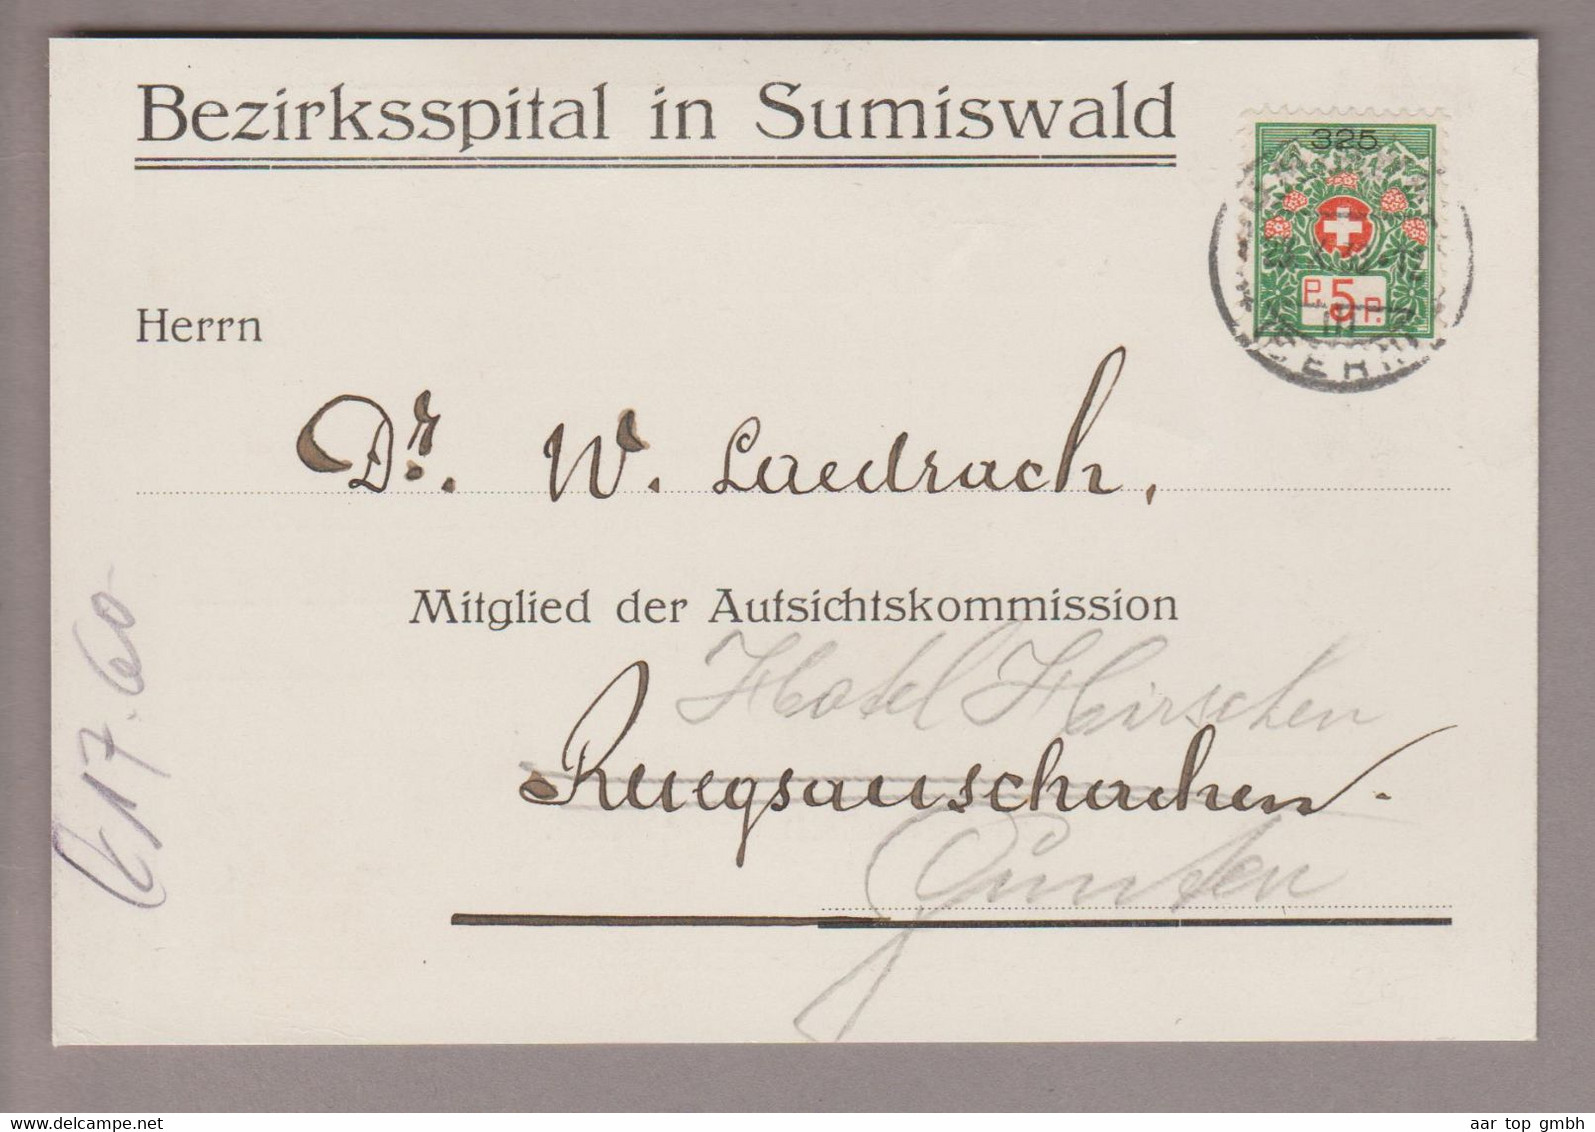 CH Portofreiheit Zu#8 5Rp. GR#325 Postkarte 1933-10-27 Sumiswald Bezirksspital - Franchise